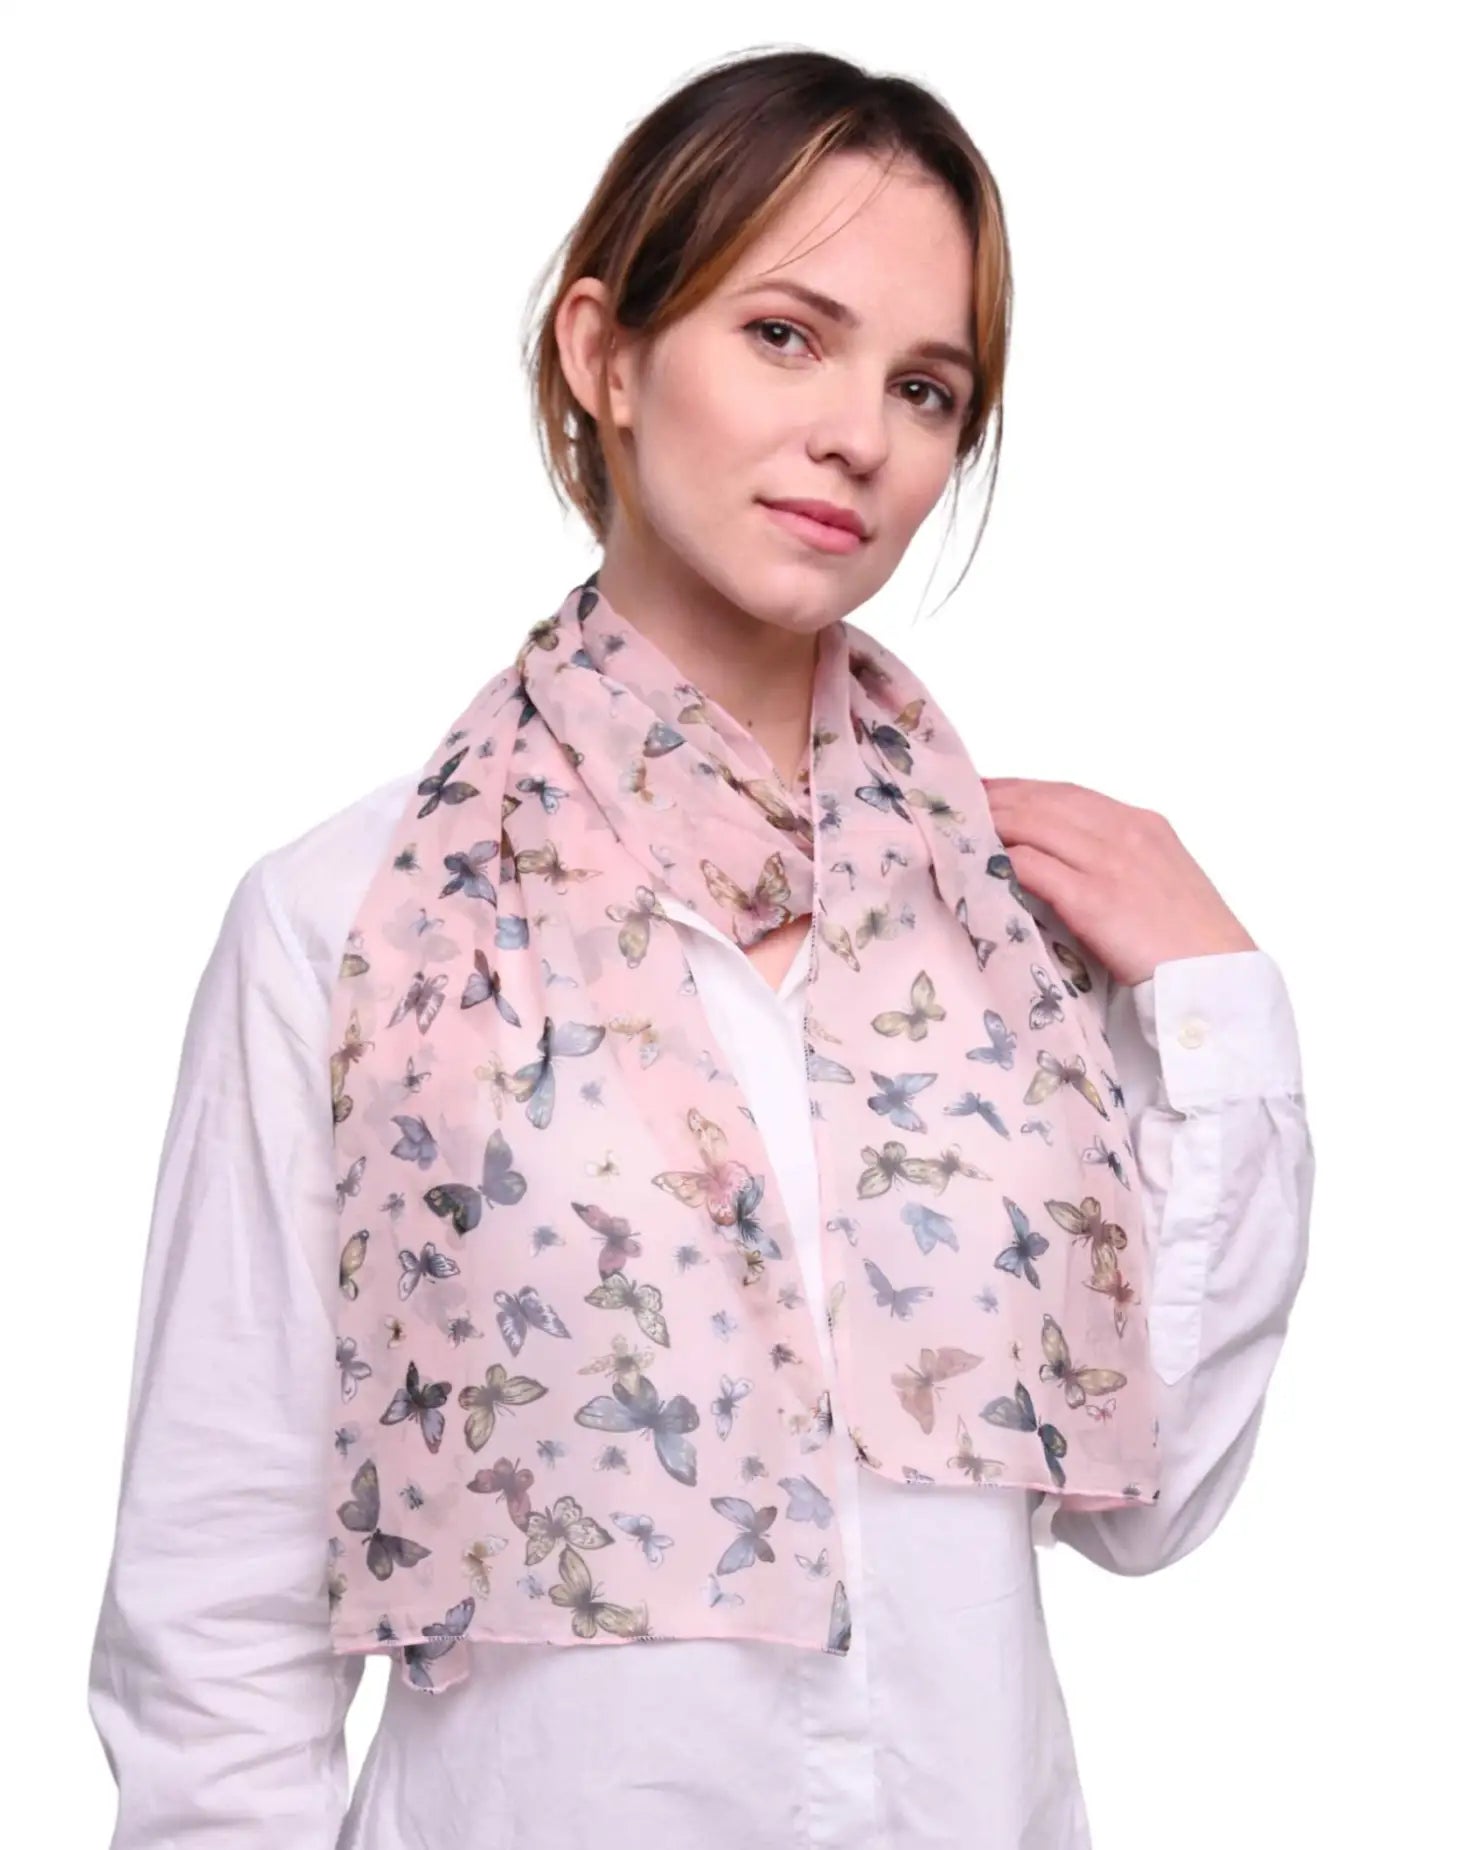 Butterfly print scarf - lightweight, soft, versatile accessory